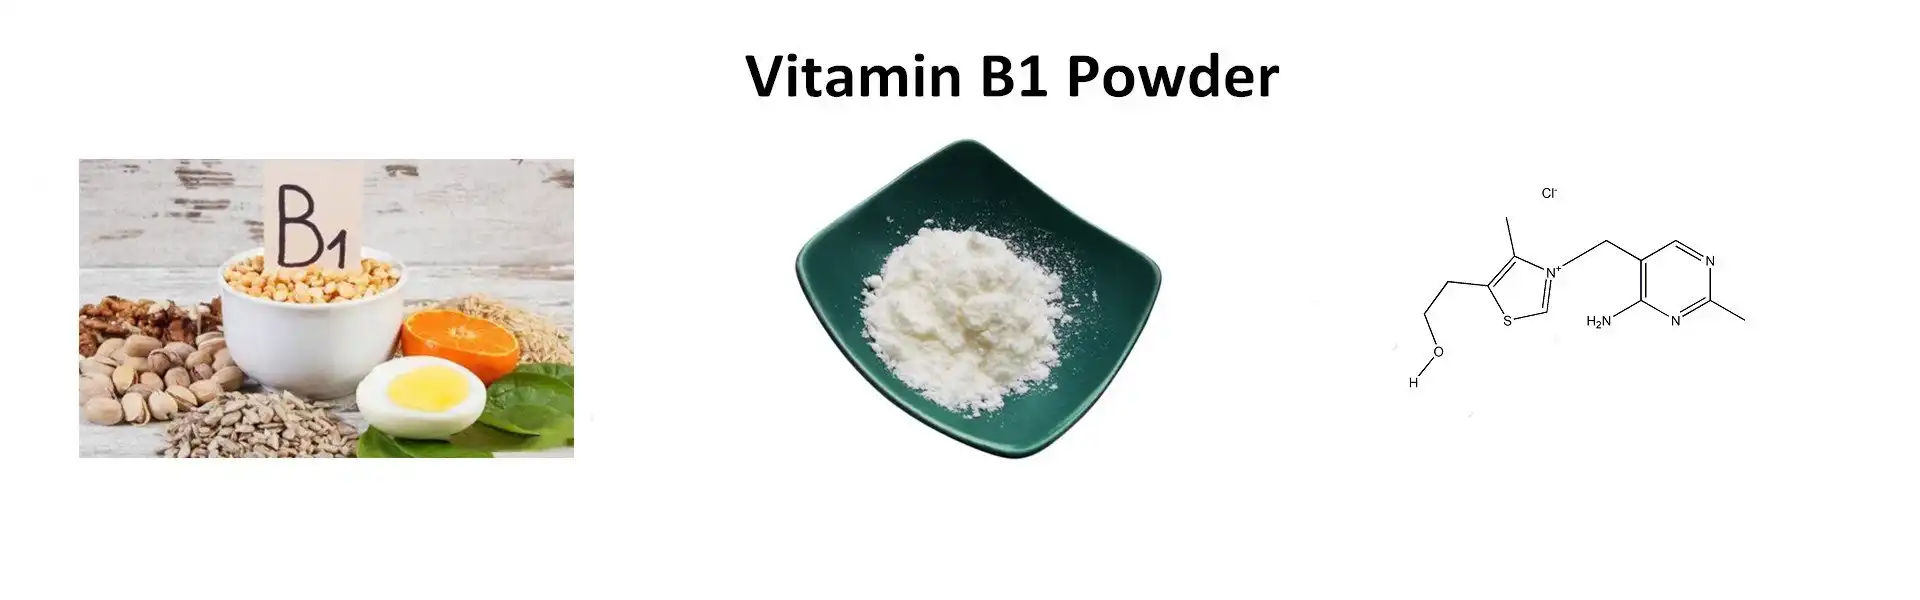 b1 vitamin powder